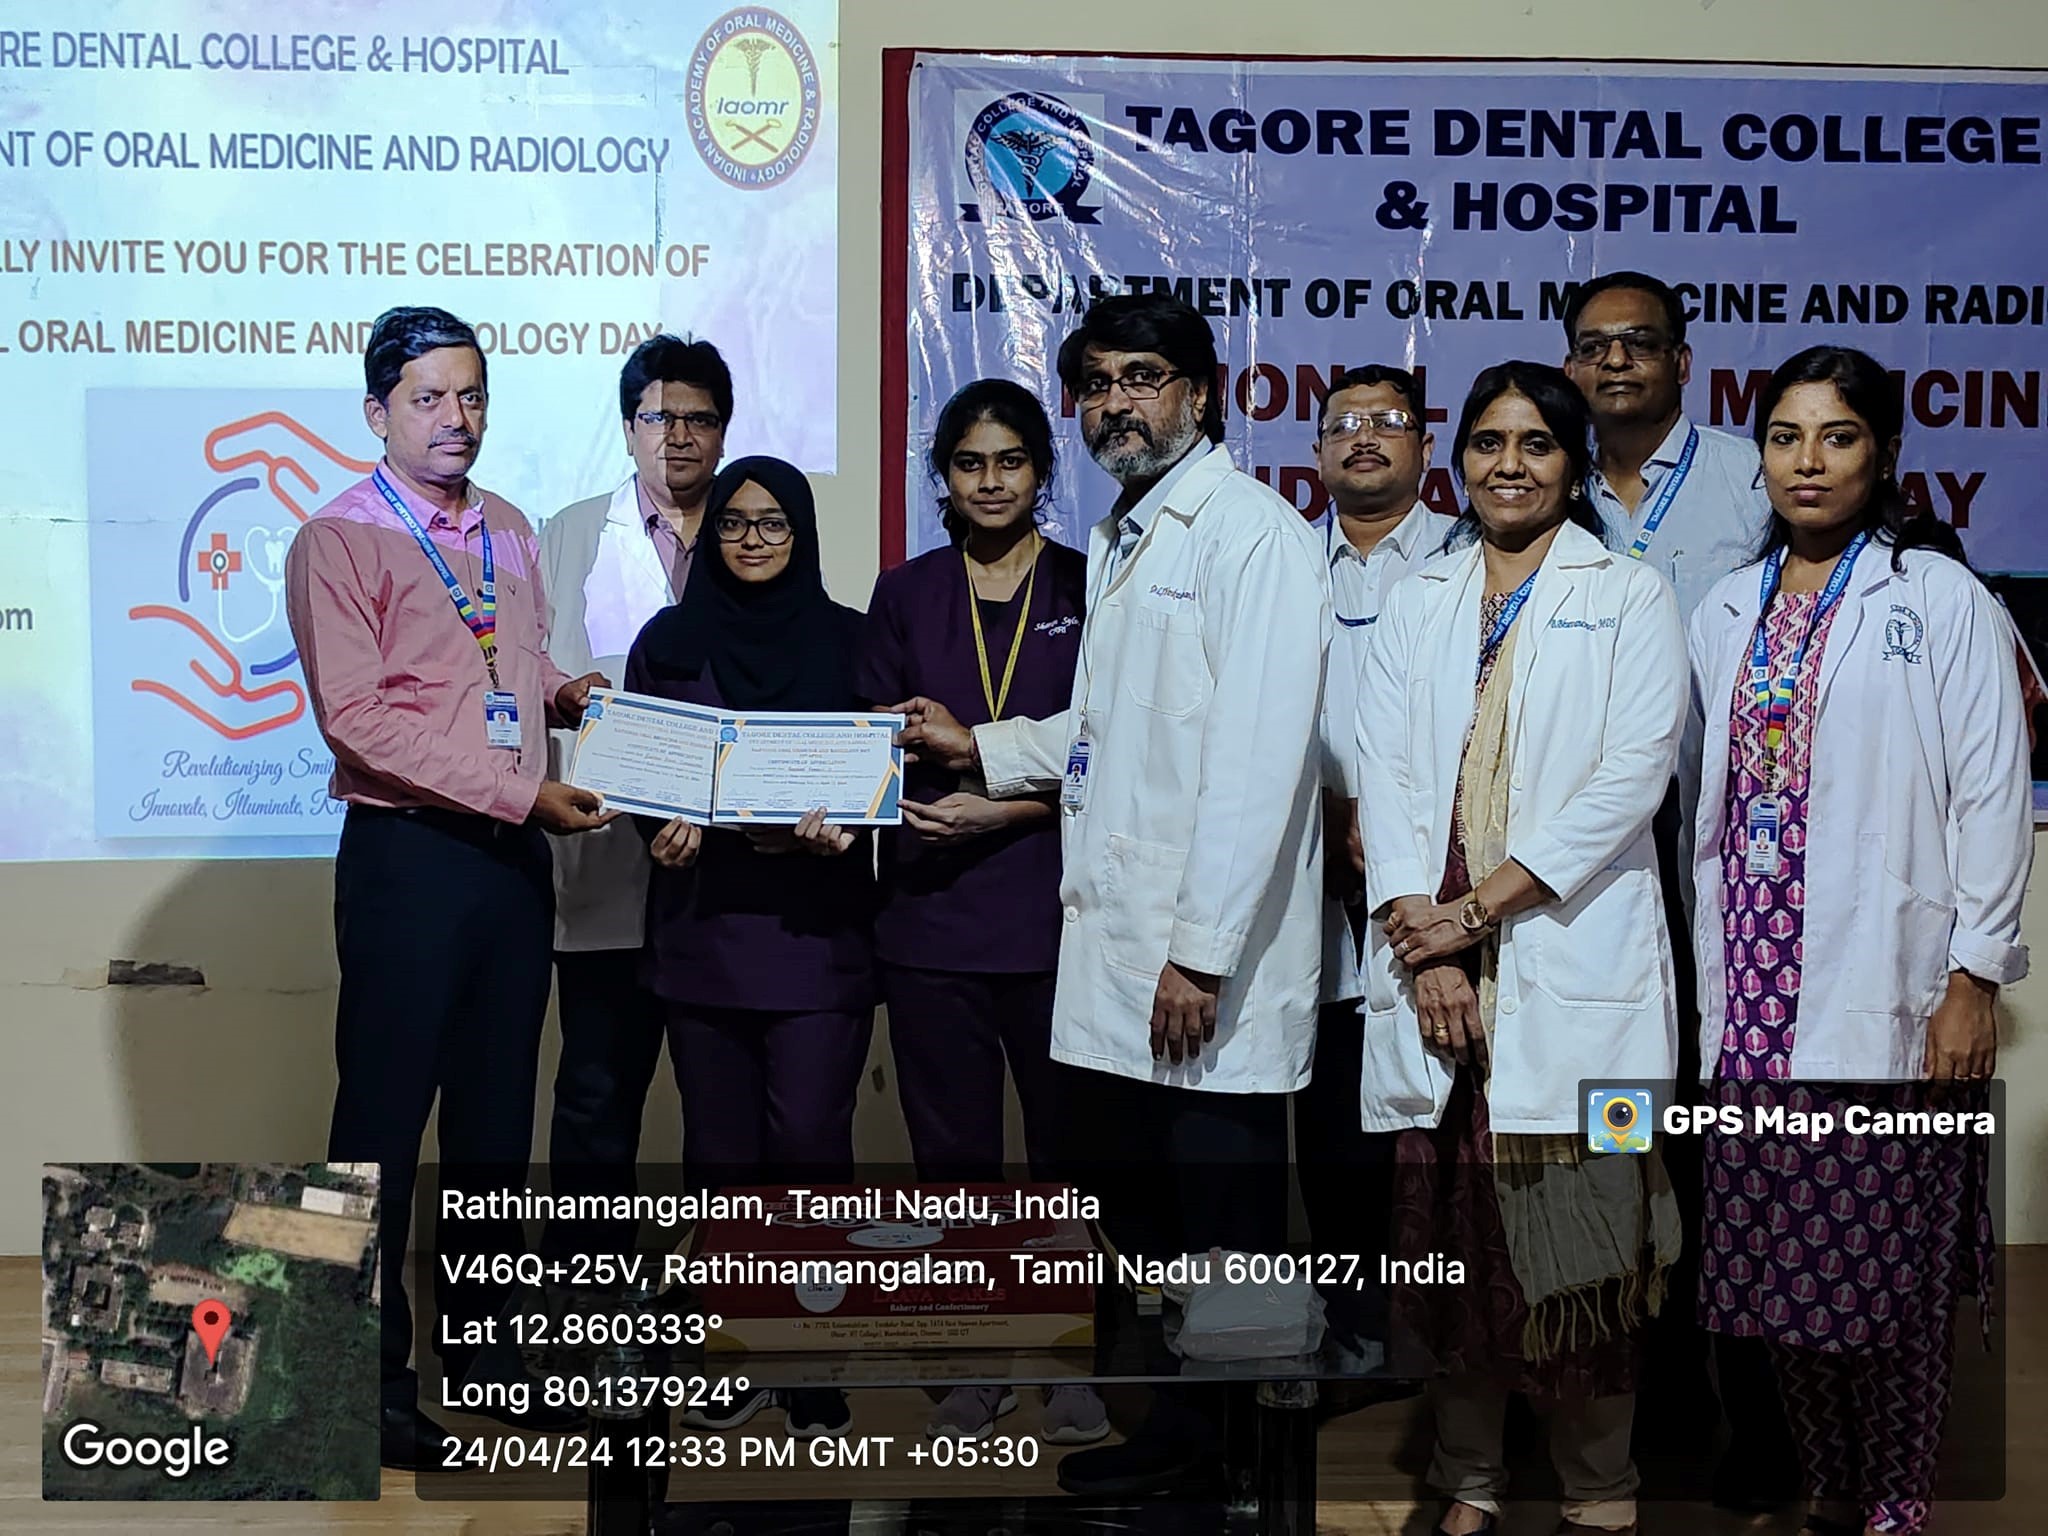 Tagore dental college